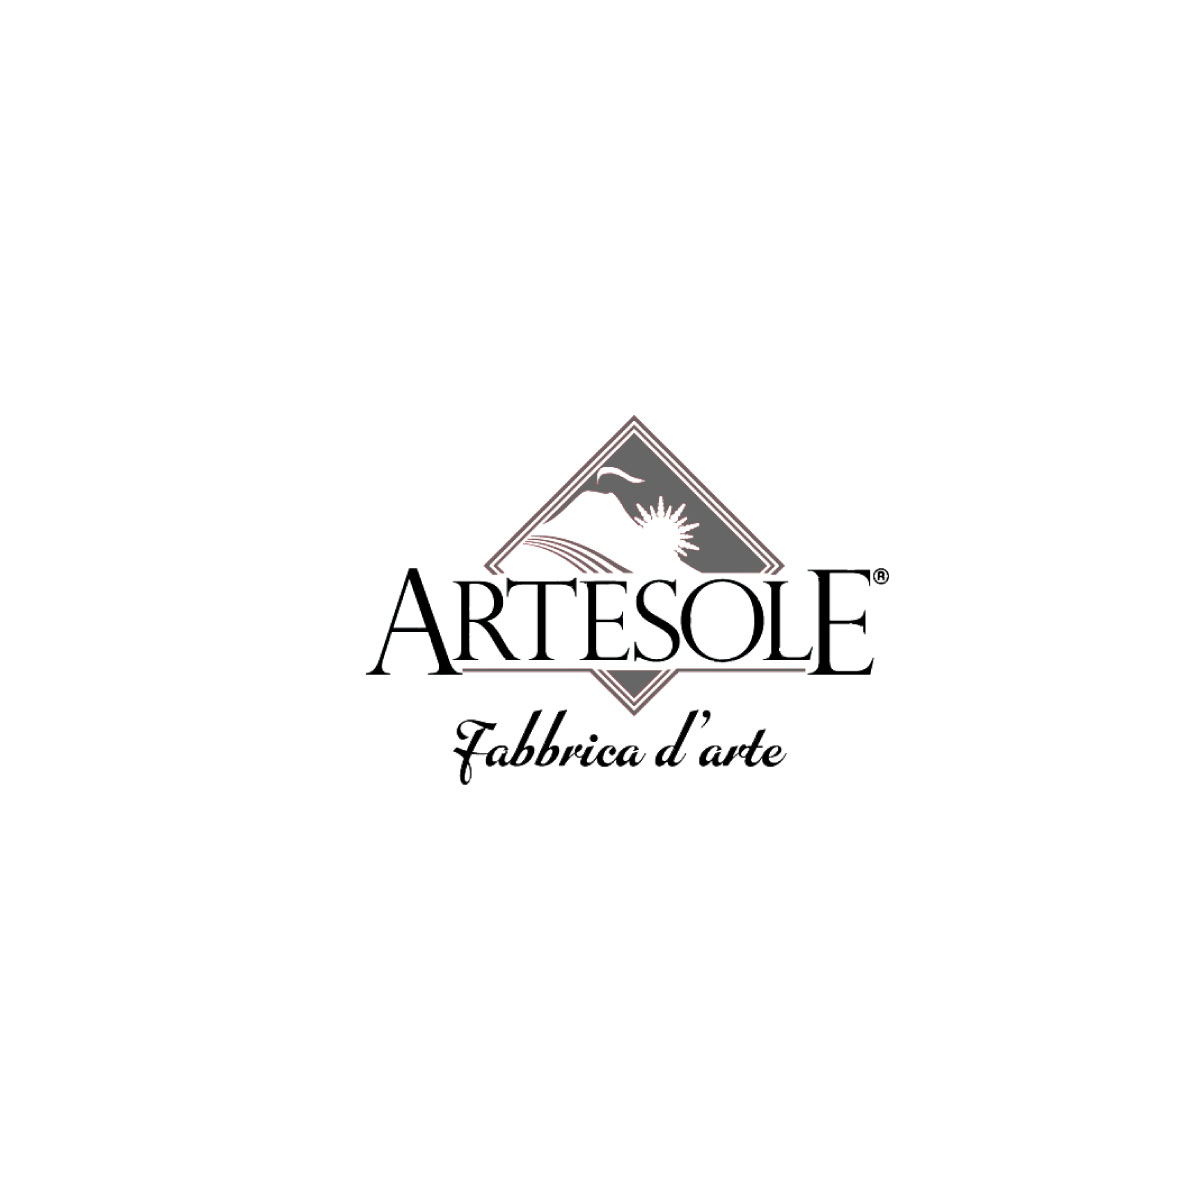 Artesole